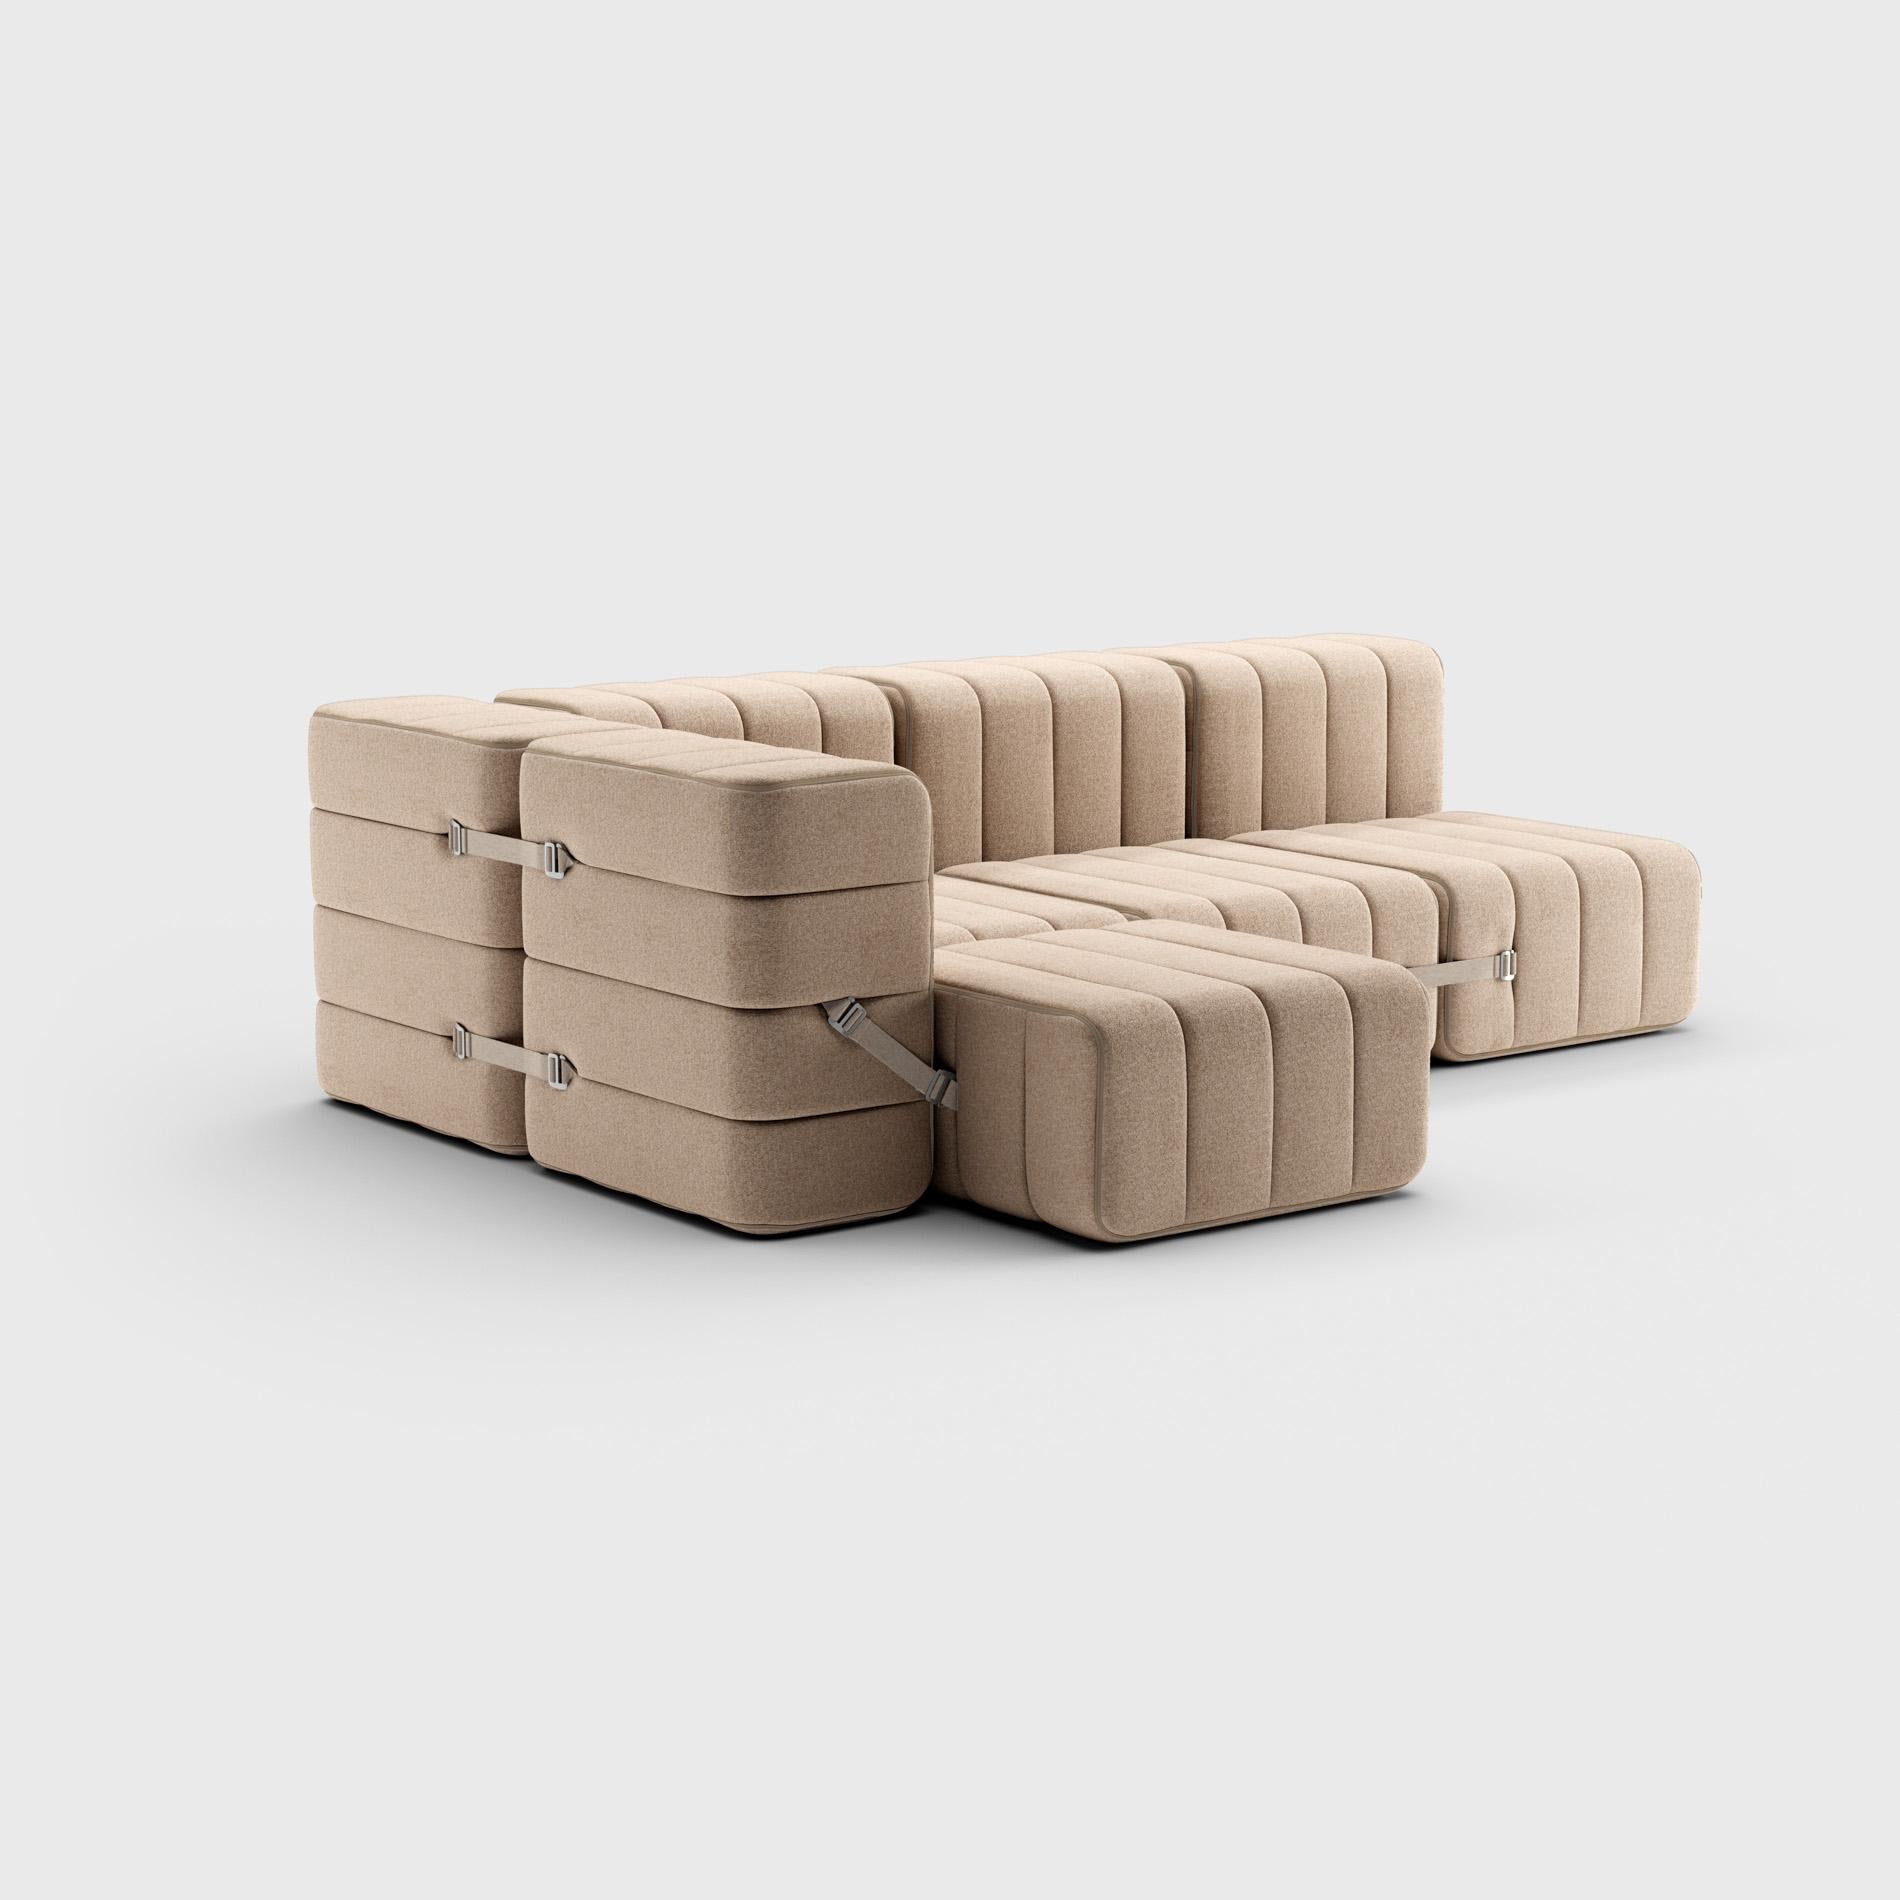 Curt Single Module, Fabric Dama '0029 Beige / Grey', Curt Modular Sofa System In New Condition For Sale In Berlin, BE